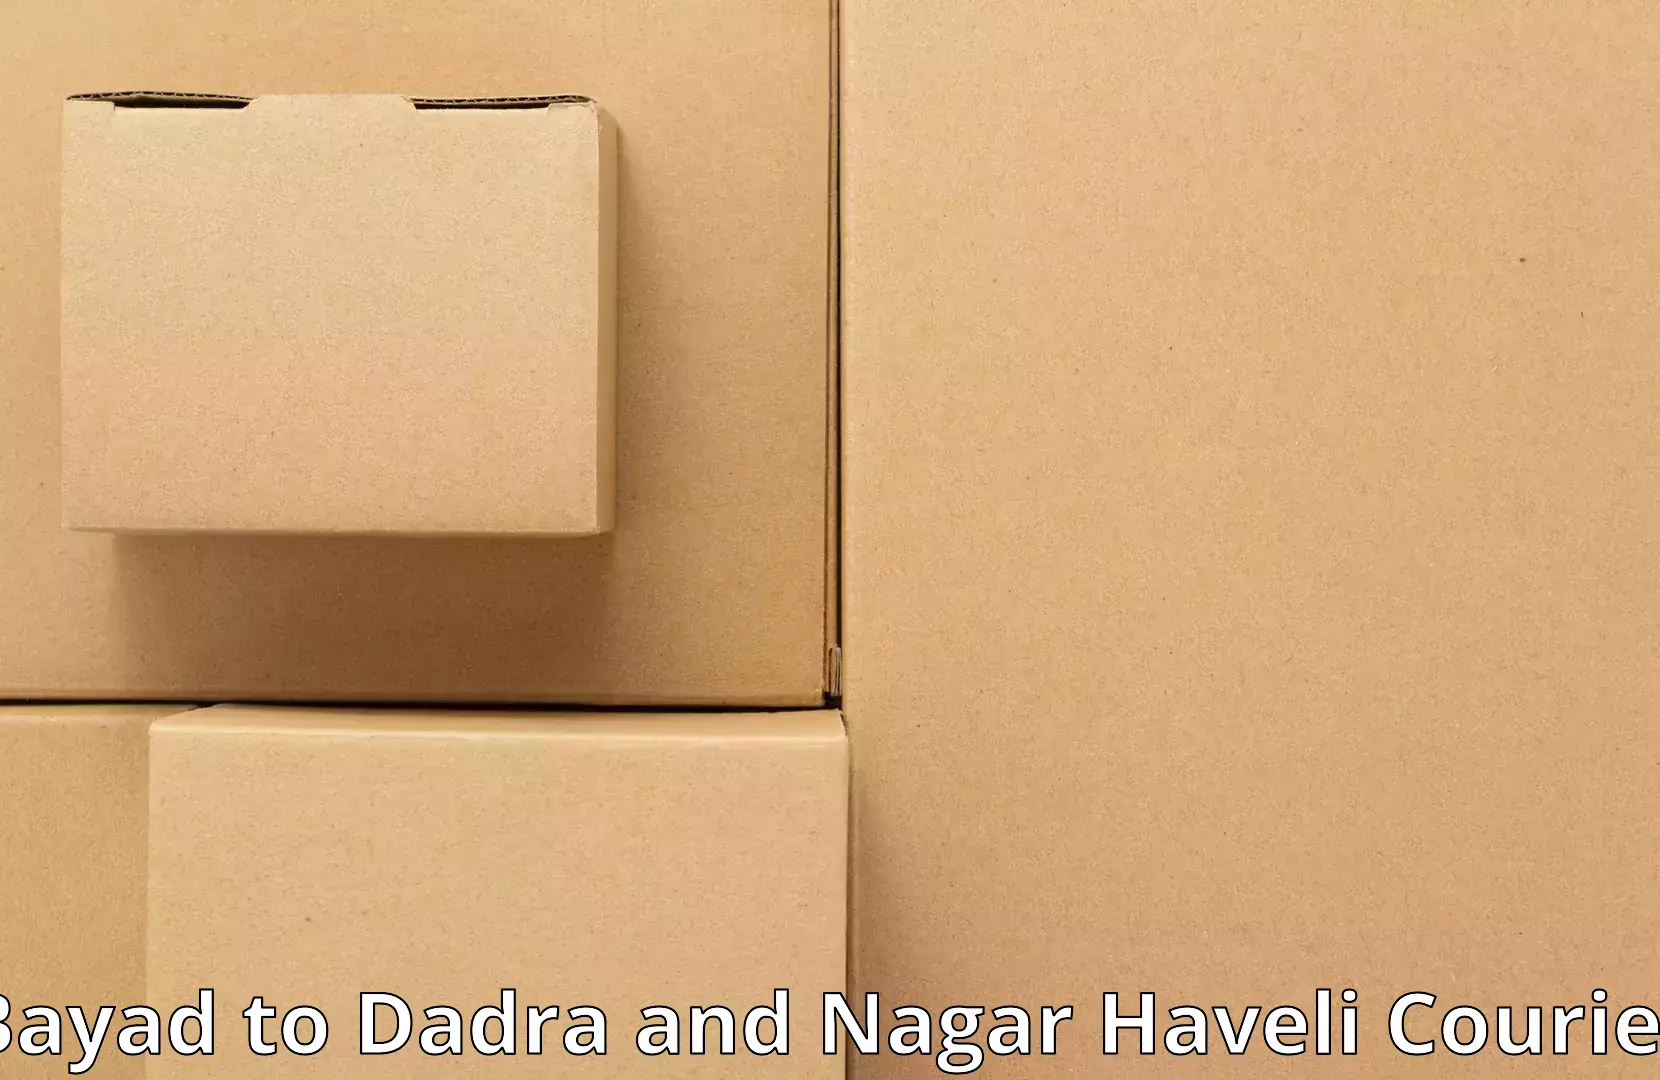 Furniture relocation experts Bayad to Dadra and Nagar Haveli